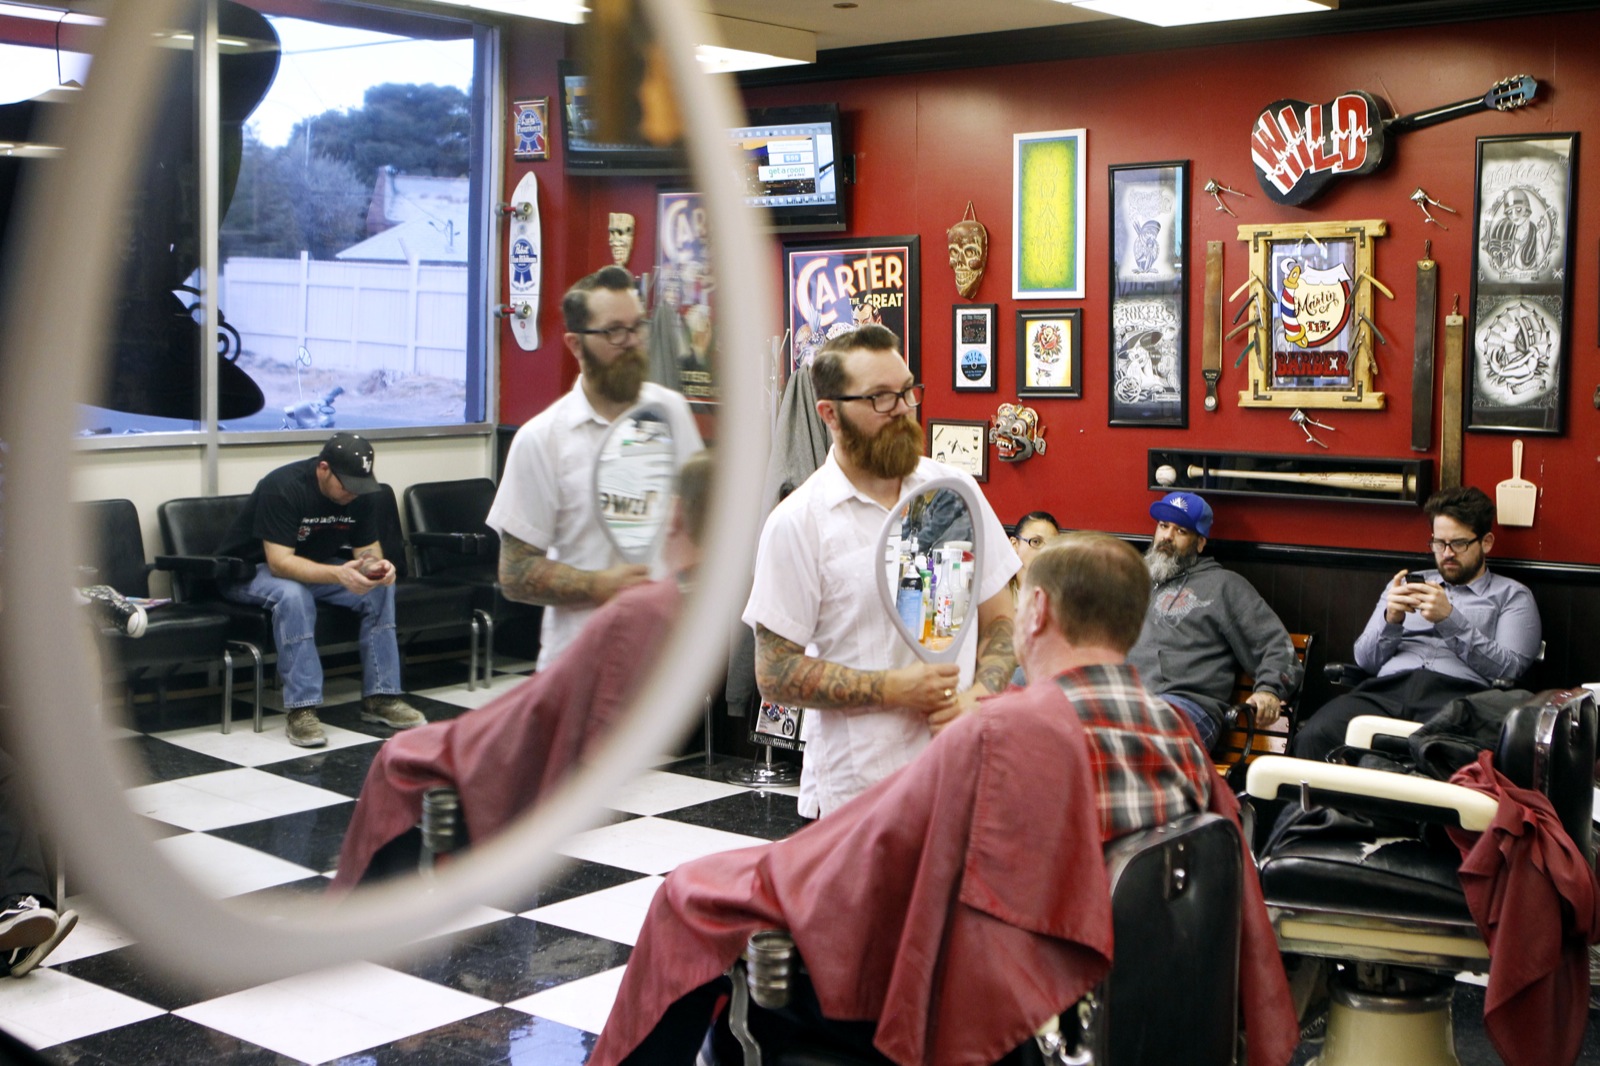 Las Vegas Barber Shop updated - Las Vegas Barber Shop